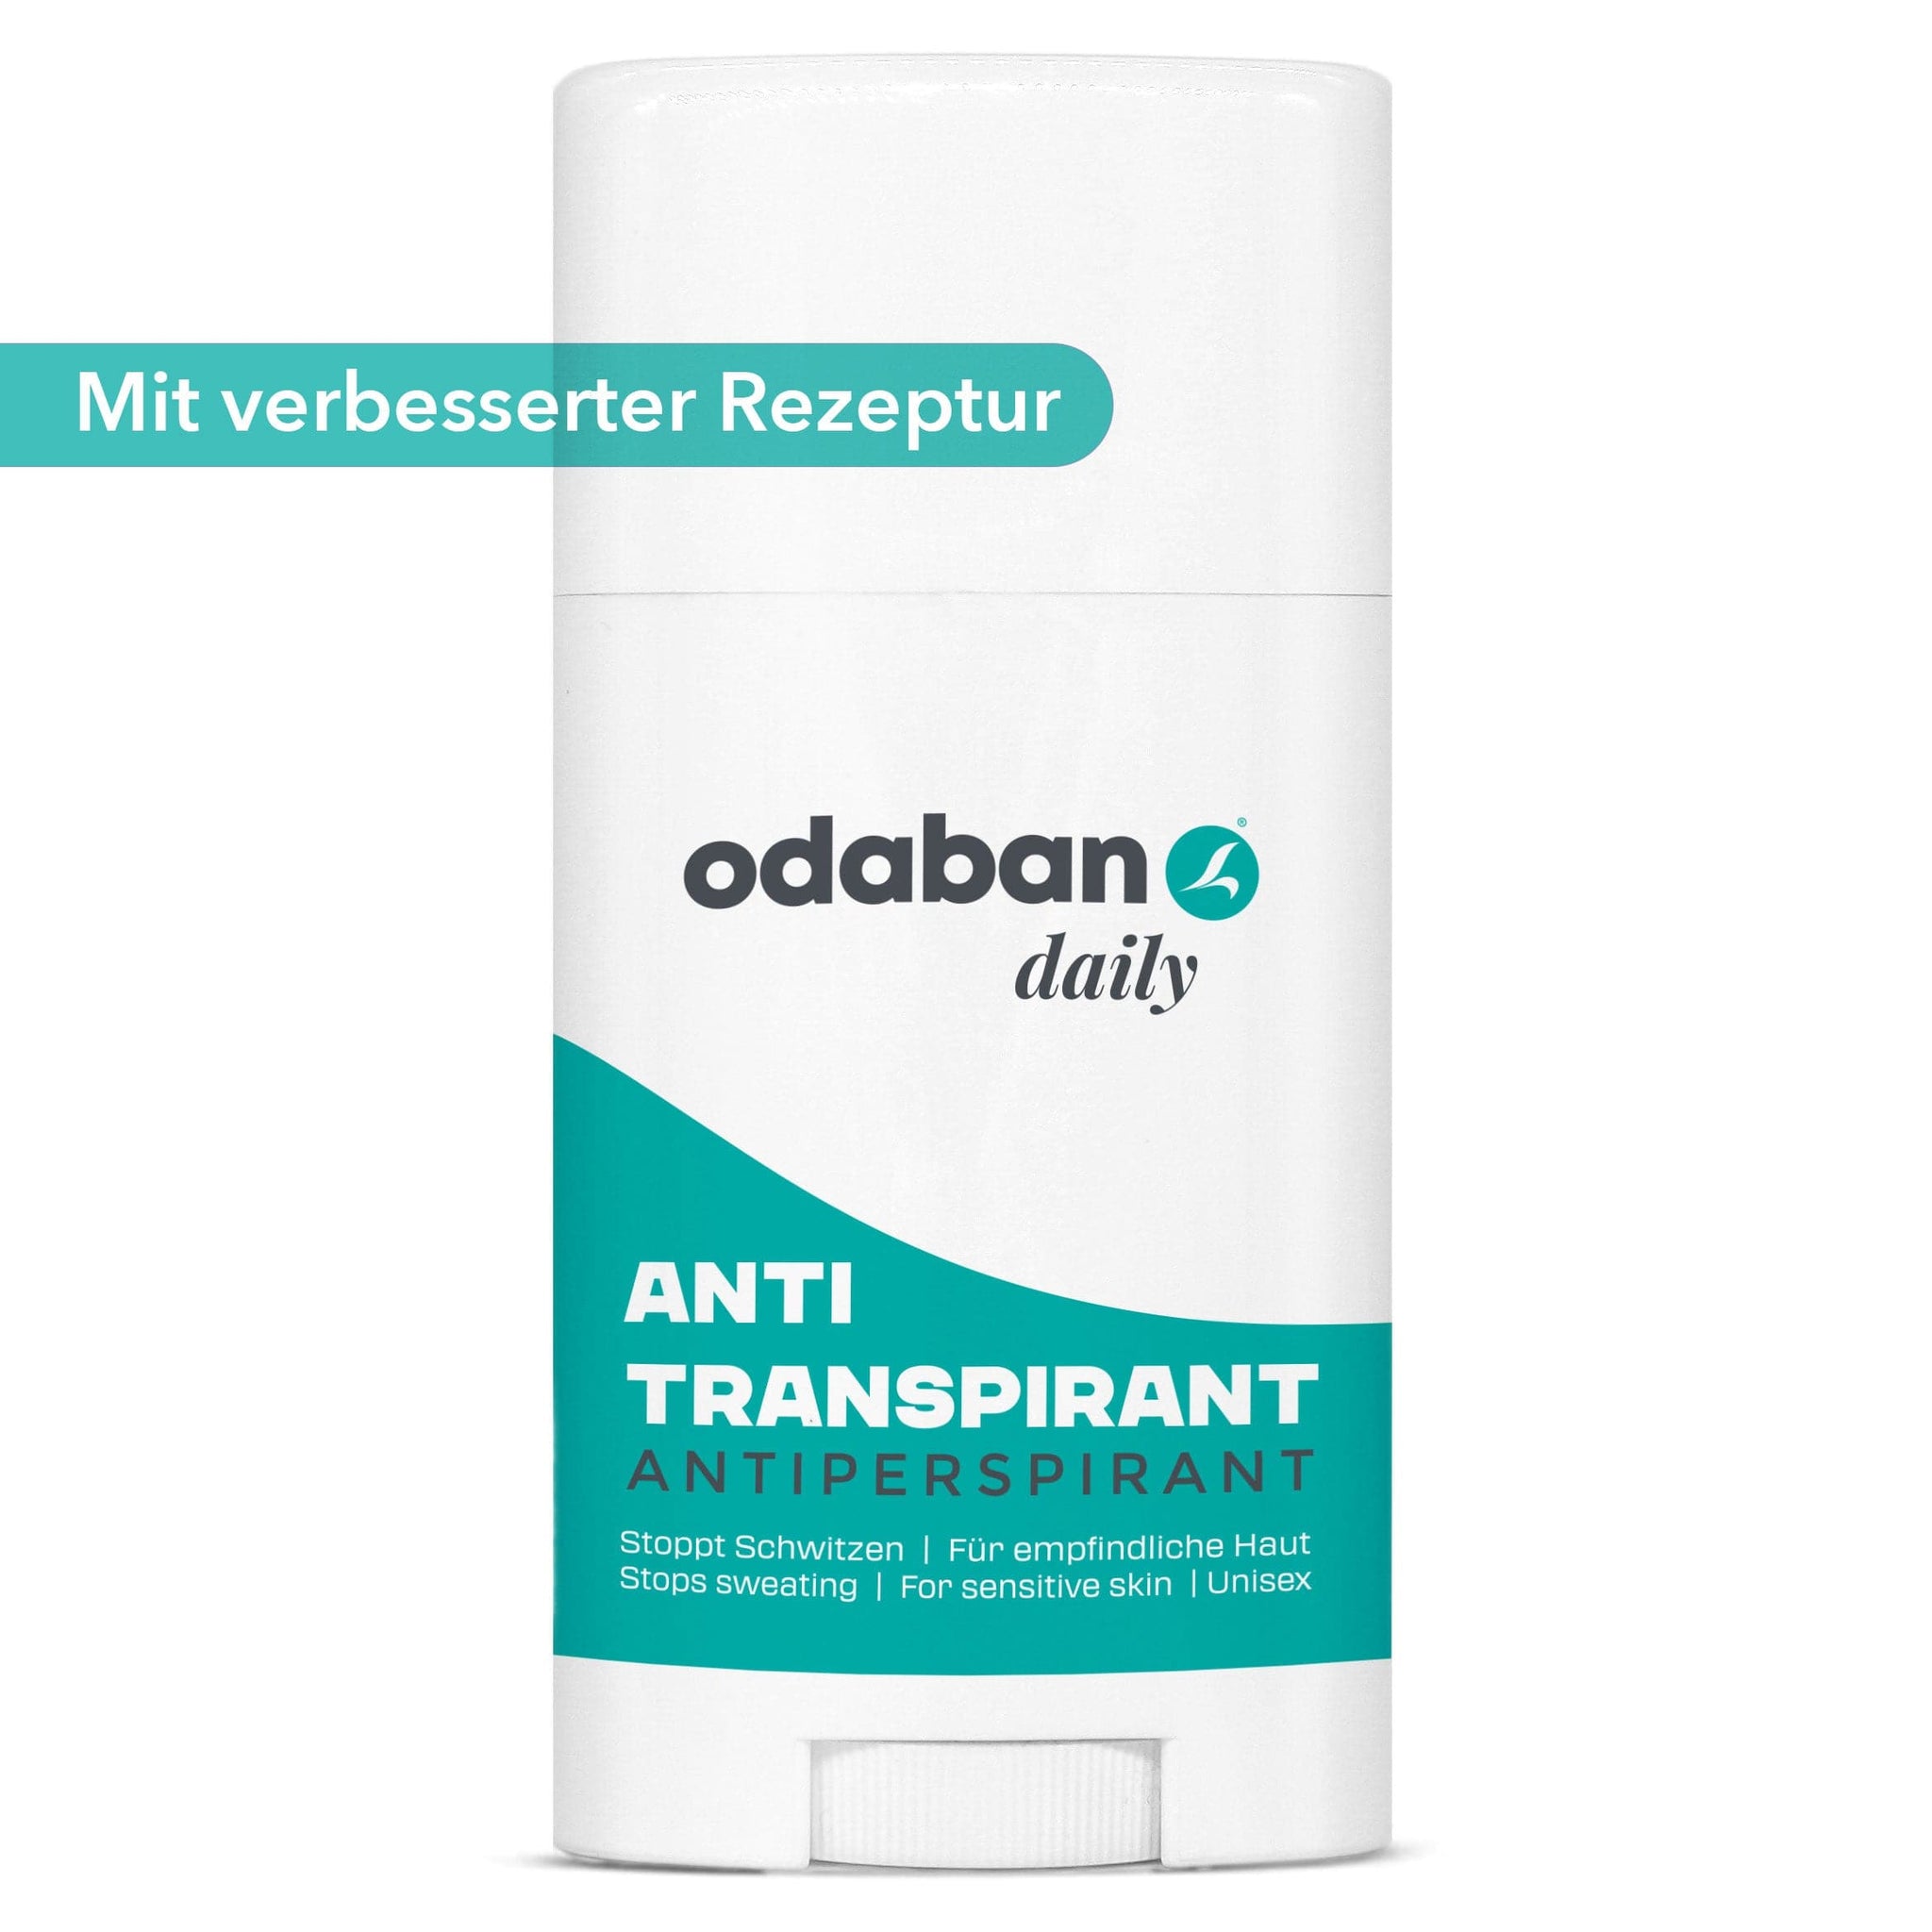 odaban® daily Antitranspirant Deo Stick